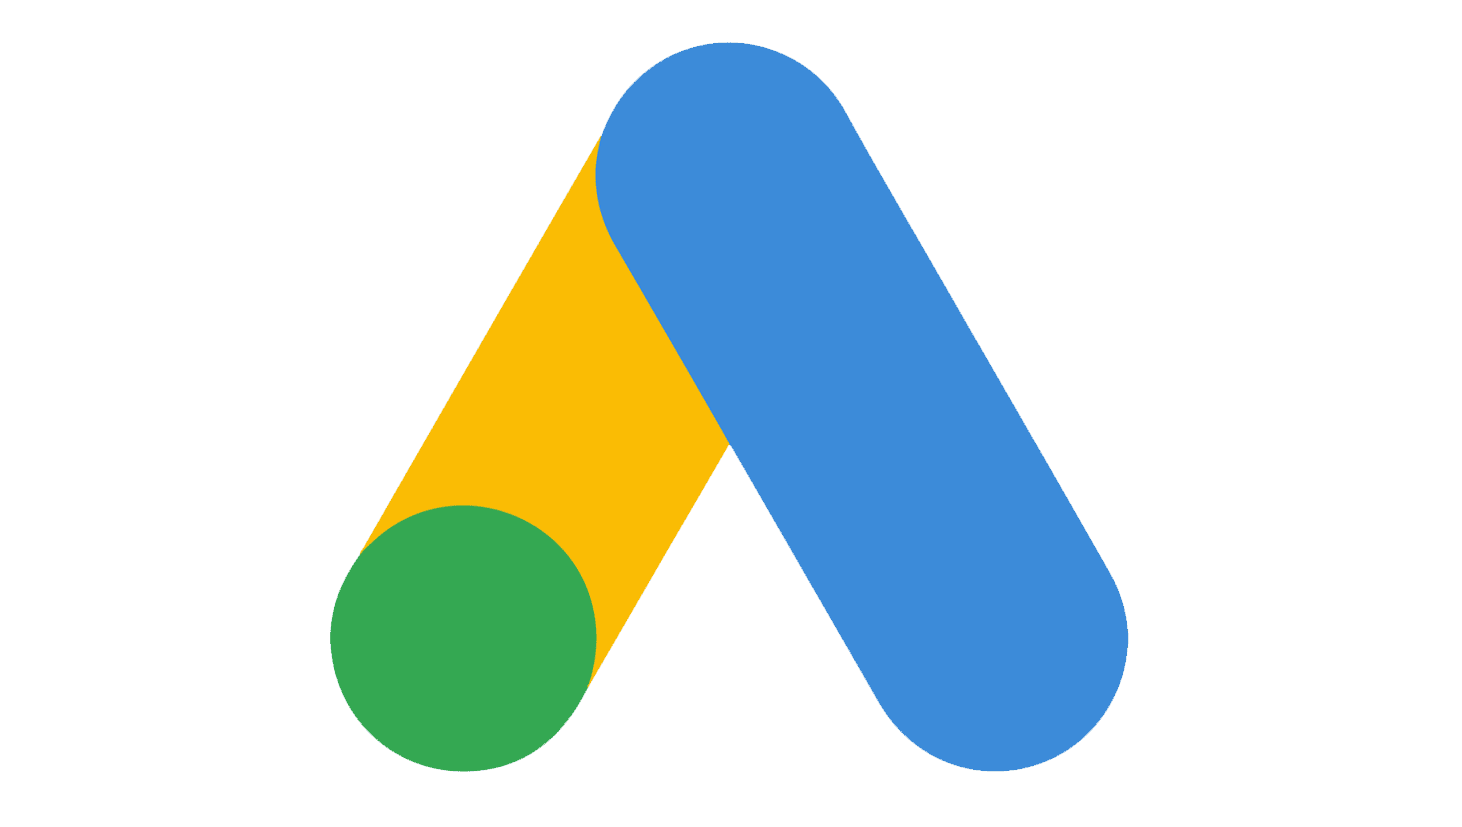 Google-AdWords-Logo